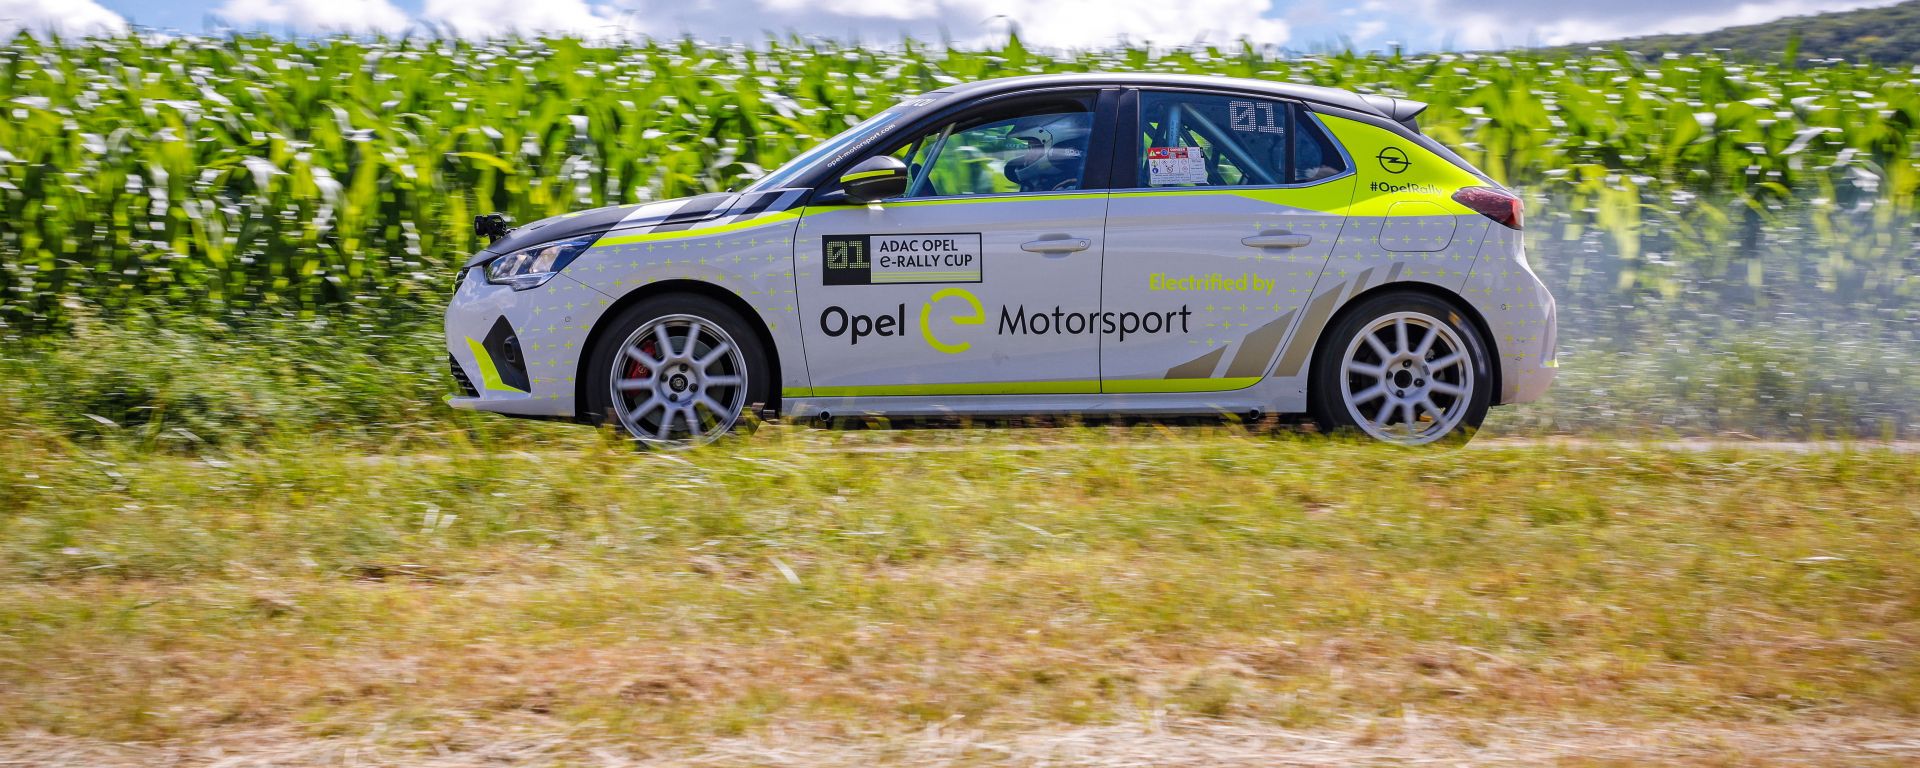 Nuovo Standard Di Sicurezza Per L Adac Opel E Rally Cup Motorbox